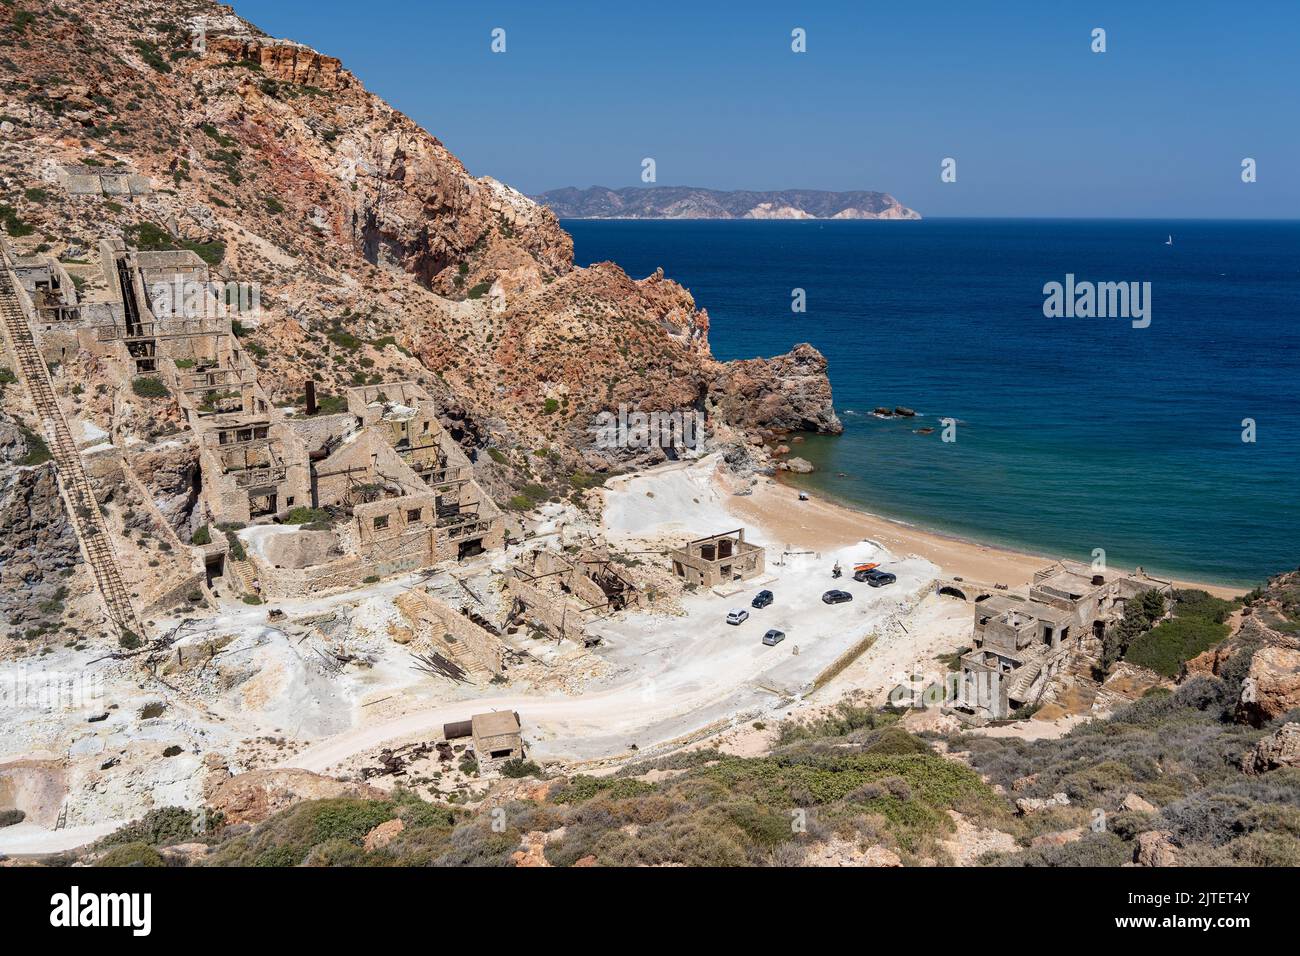 Thiorichia beach, milos island, greece Stock Photo